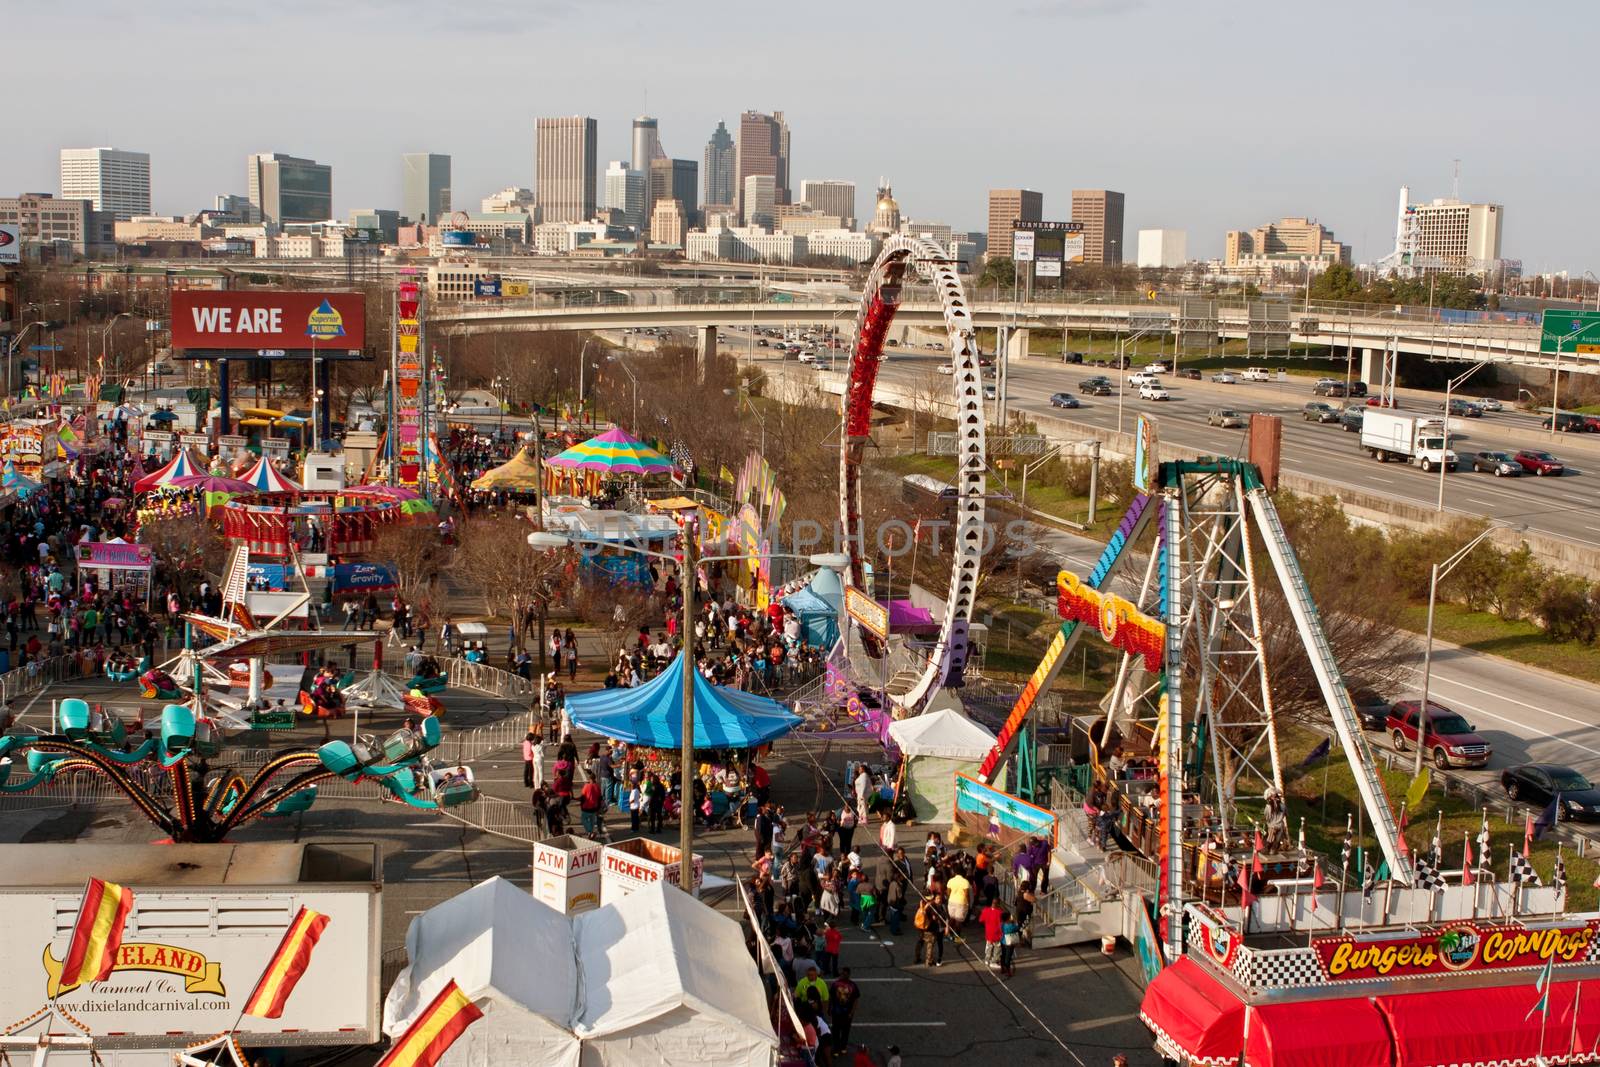 Elevated View Of Atlanta Fair Shows City Skyline by BluIz60